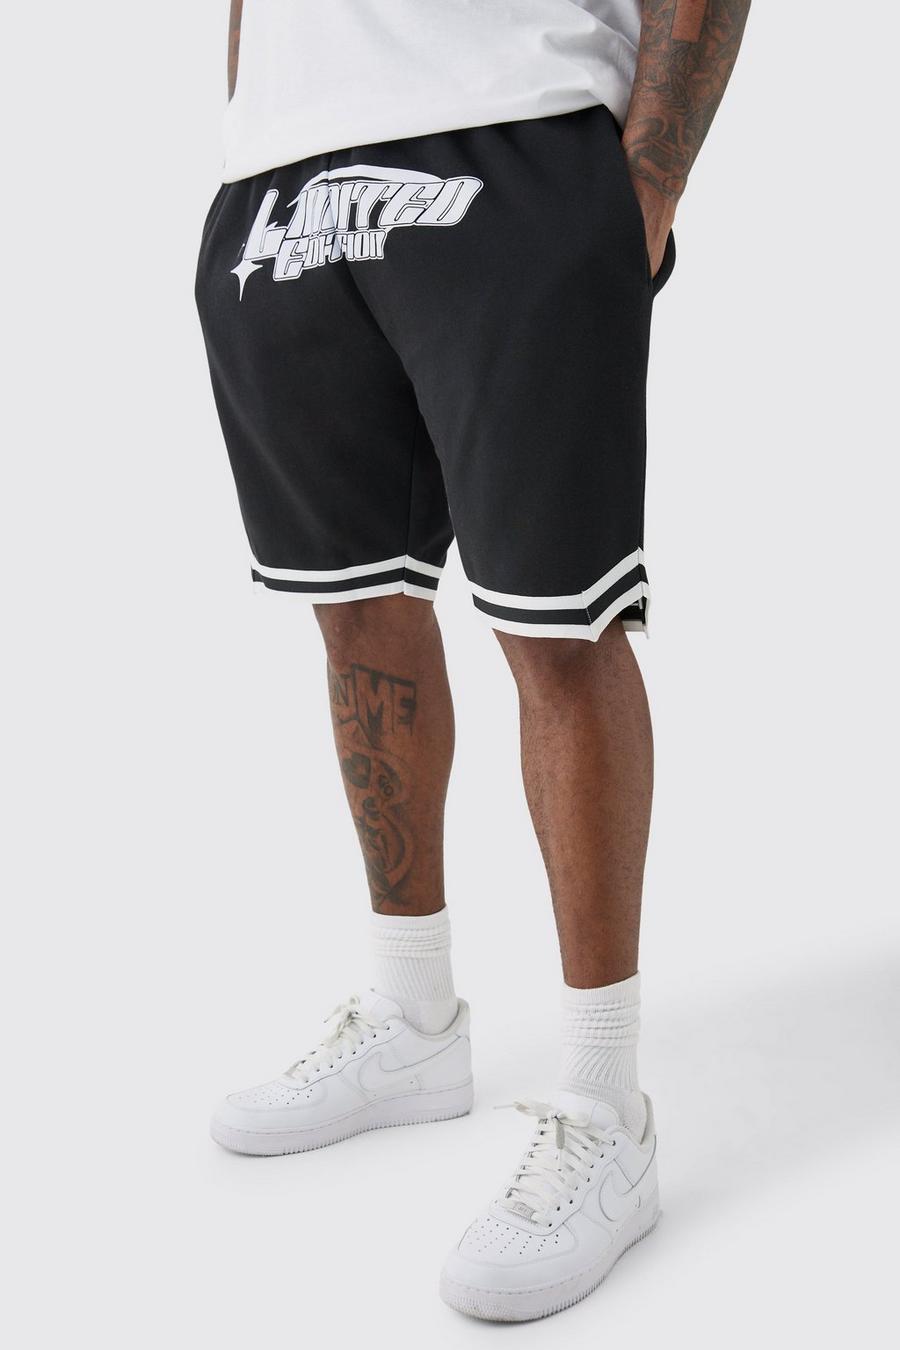 Pantalón corto Plus holgado negro de baloncesto Limited Edition, Black